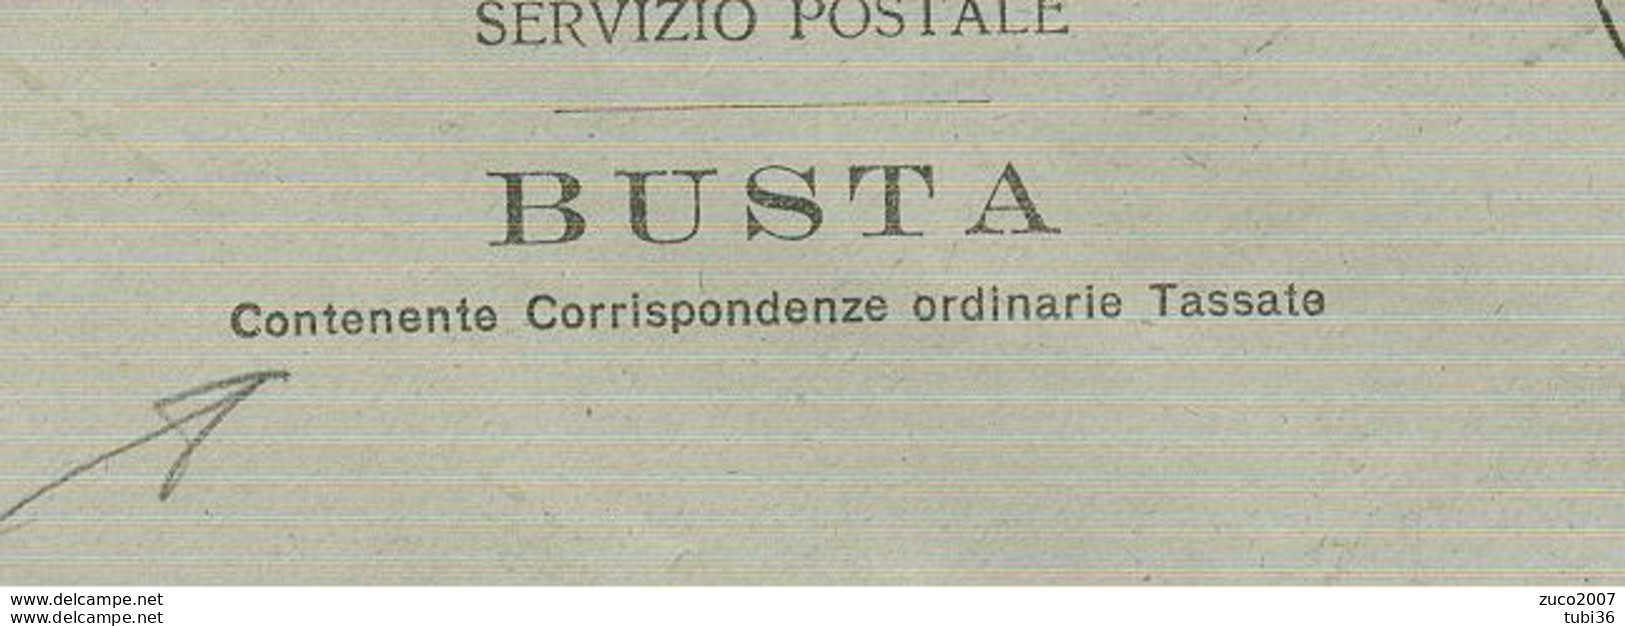 REGIE POSTE-NAPOLI-1940 -SERVIZIO POSTALE- BUSTA CONTENENTE CORRISPONDENZA ORDINARIA TASSATA-MOD.94,EDIZ.1938,RR - Poste